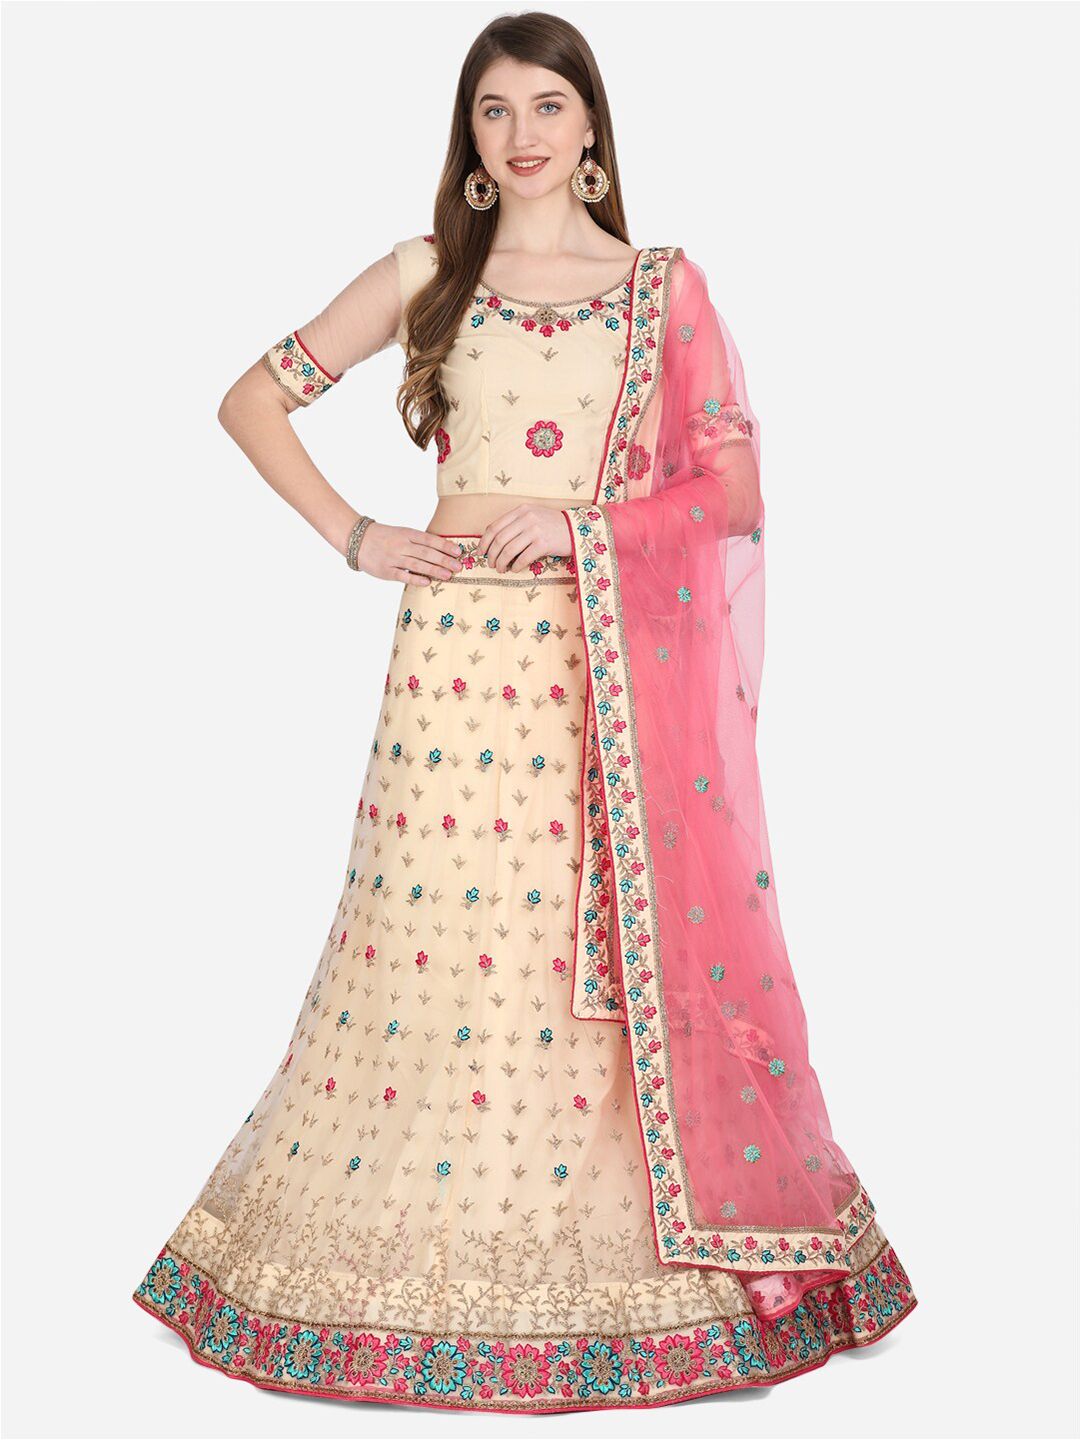 Netram Cream-Coloured & Pink Embroidered Semi-Stitched Lehenga  Set Price in India